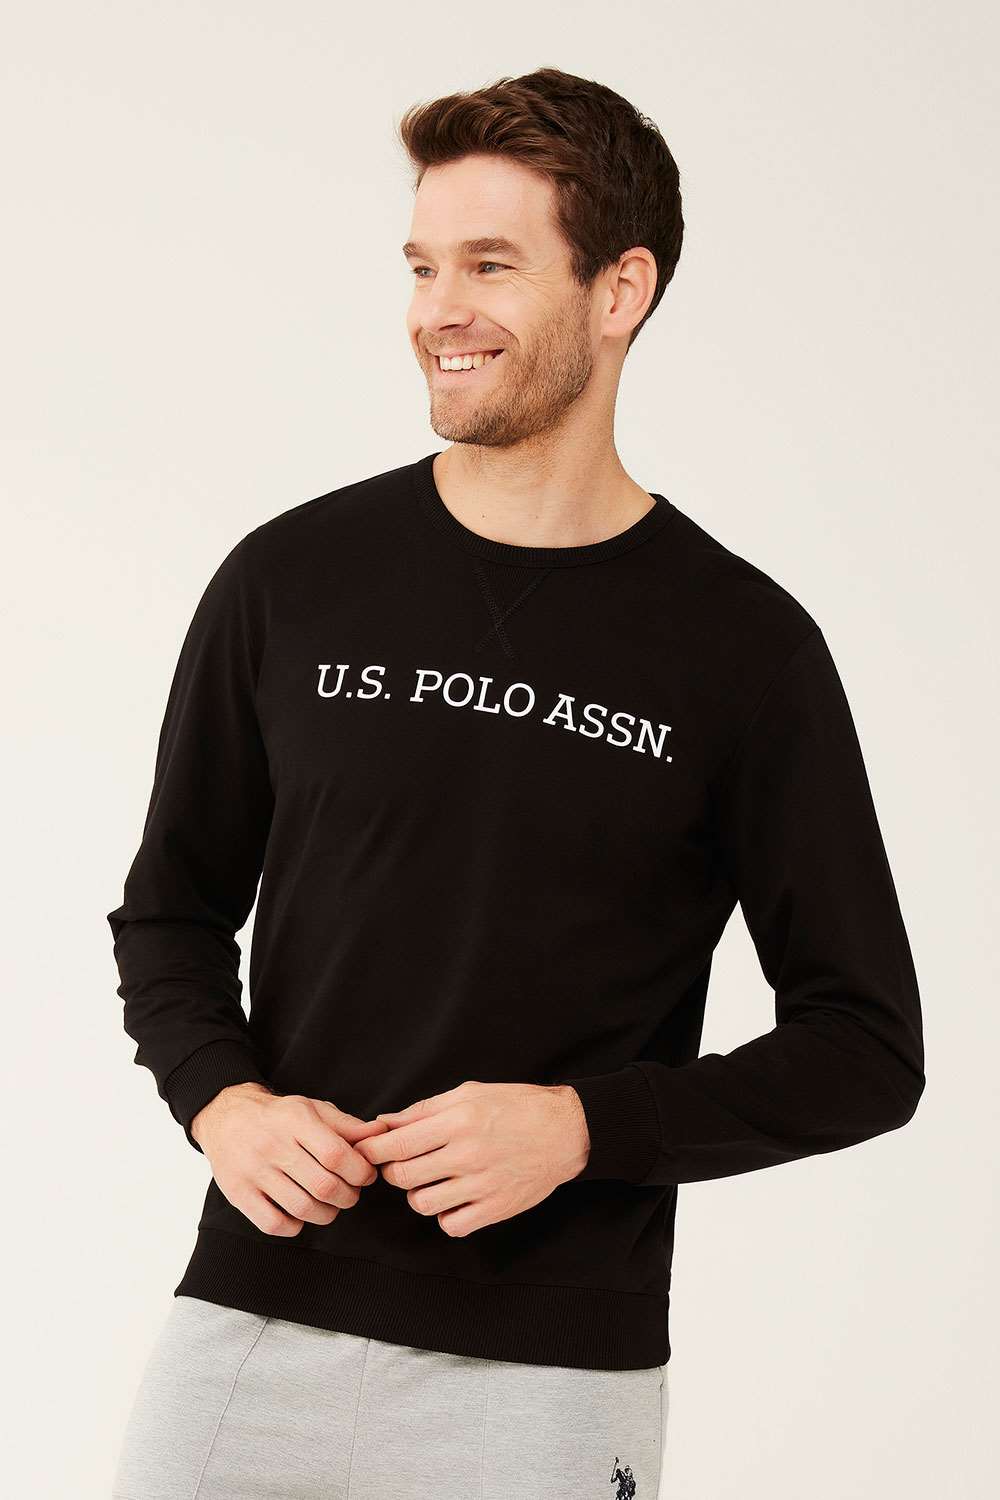 U.S. Polo Assn. Erkek Siyah Yuvarlak Yaka Ev Giyim | Modcollection.com.tr